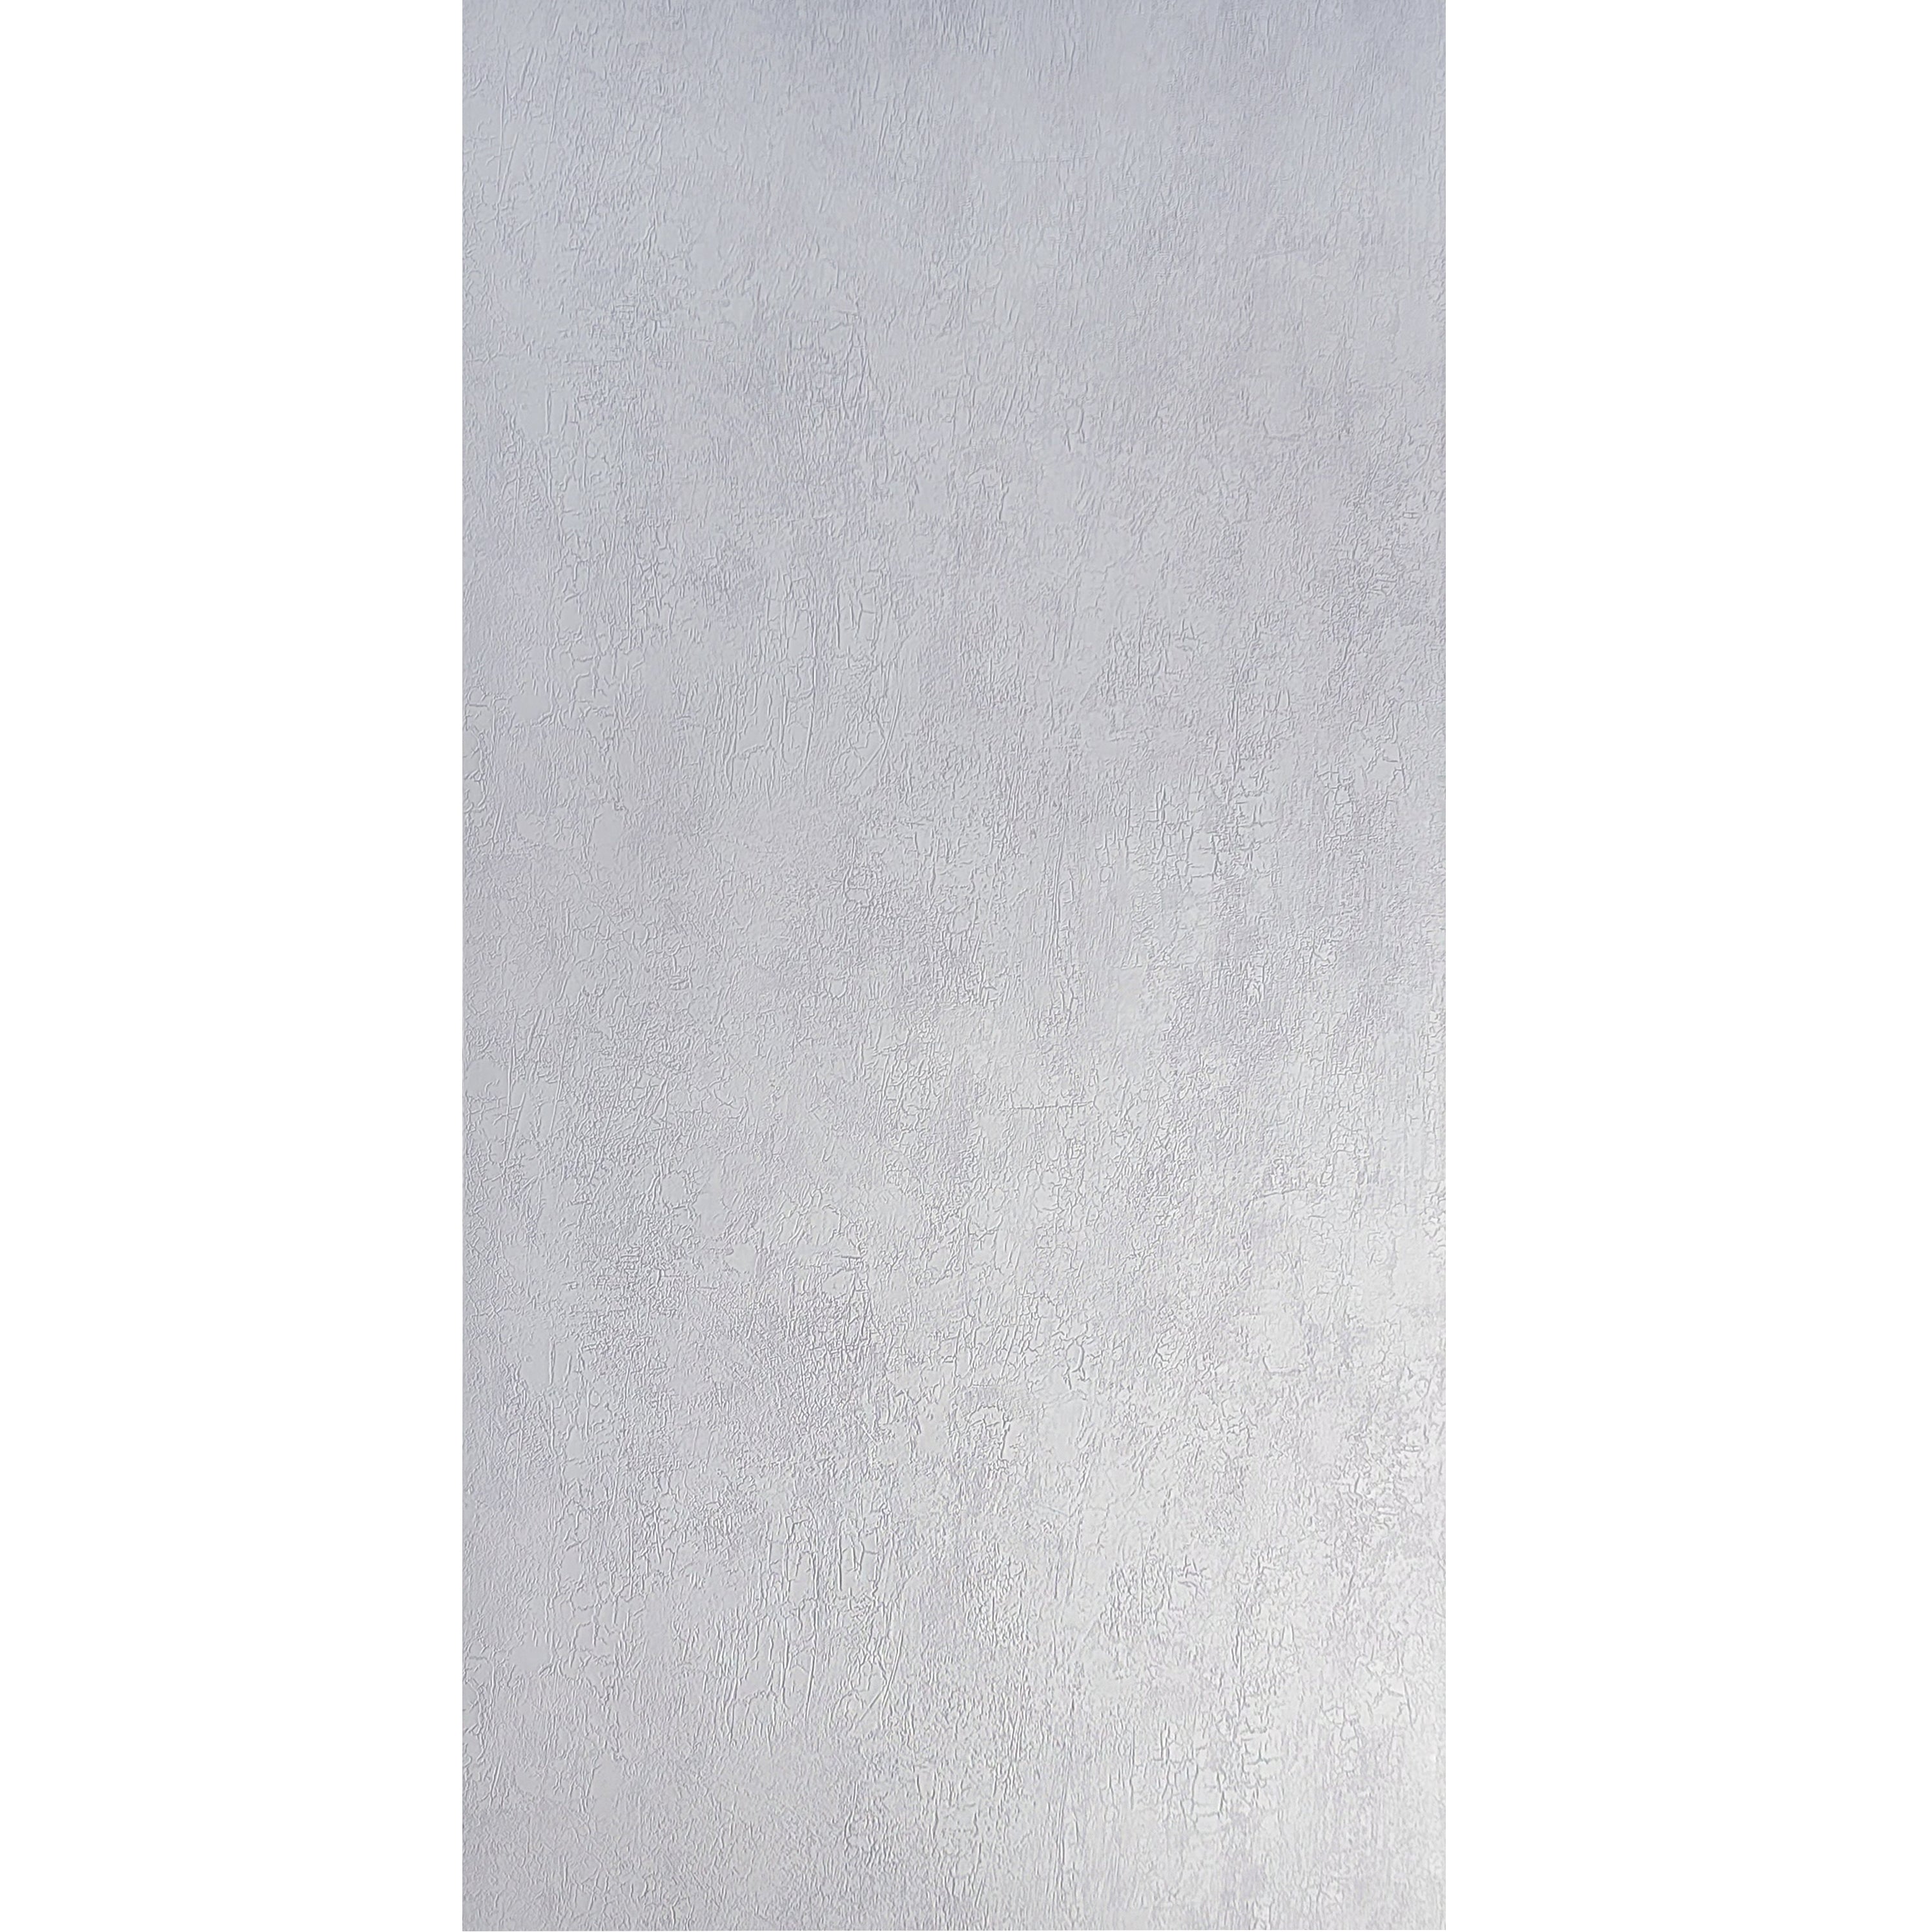 ✖️ Off-White Brand Wallpaper - Purple Spray Black Background for